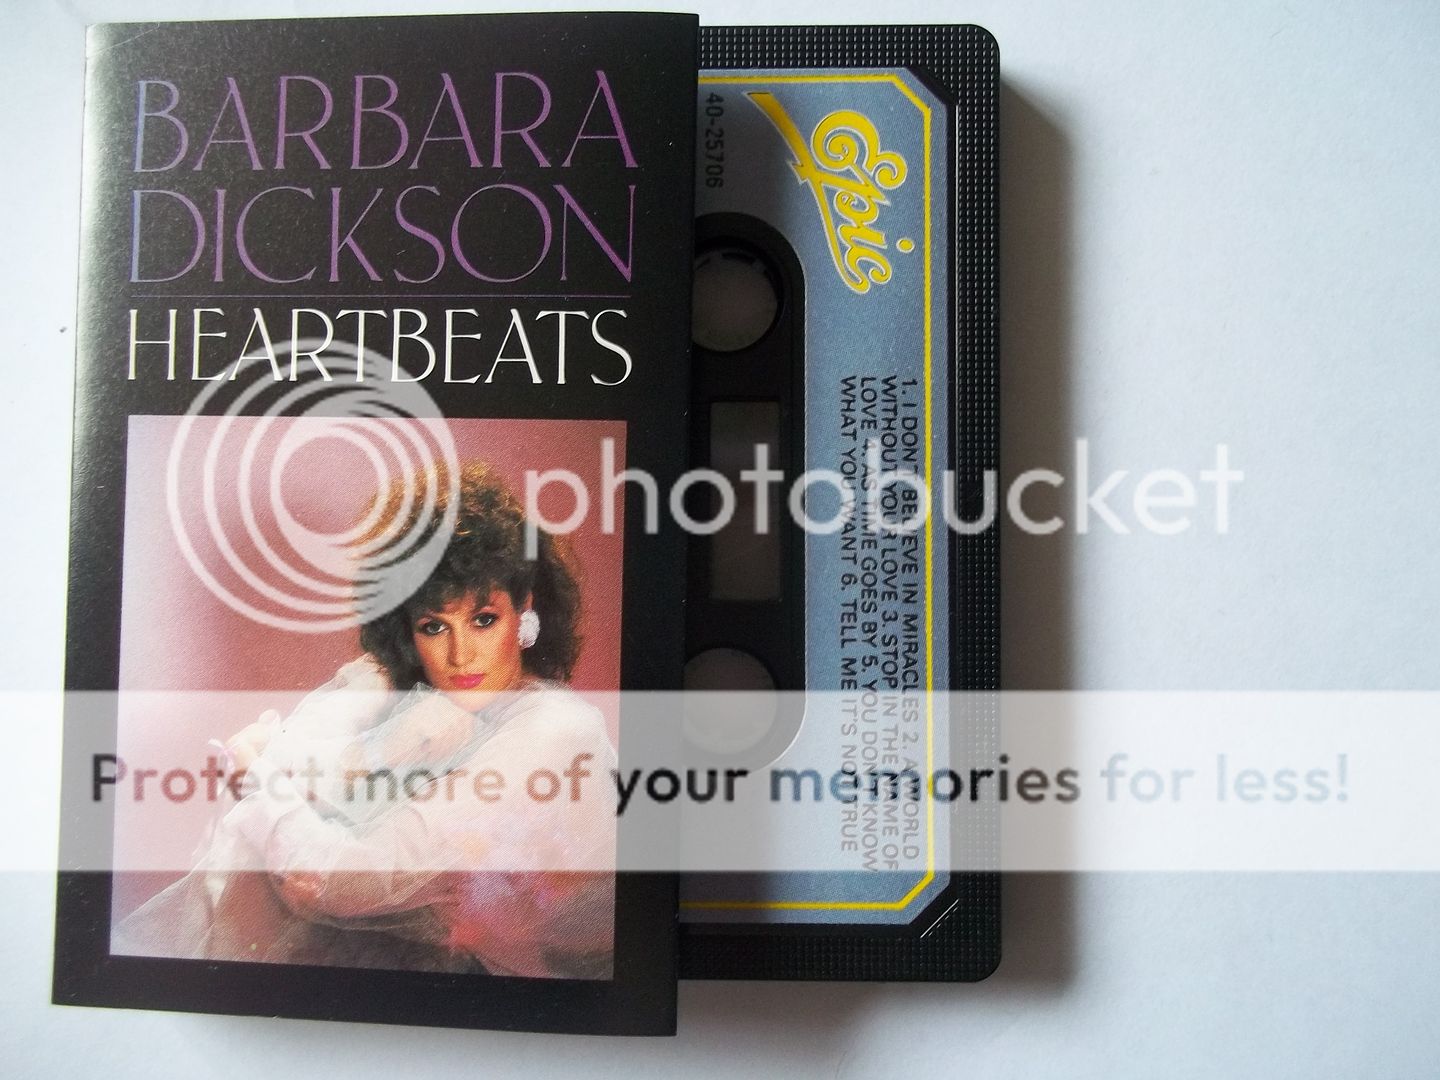 Barbara Dickson Heartbeats Records, LPs, Vinyl and CDs - MusicStack